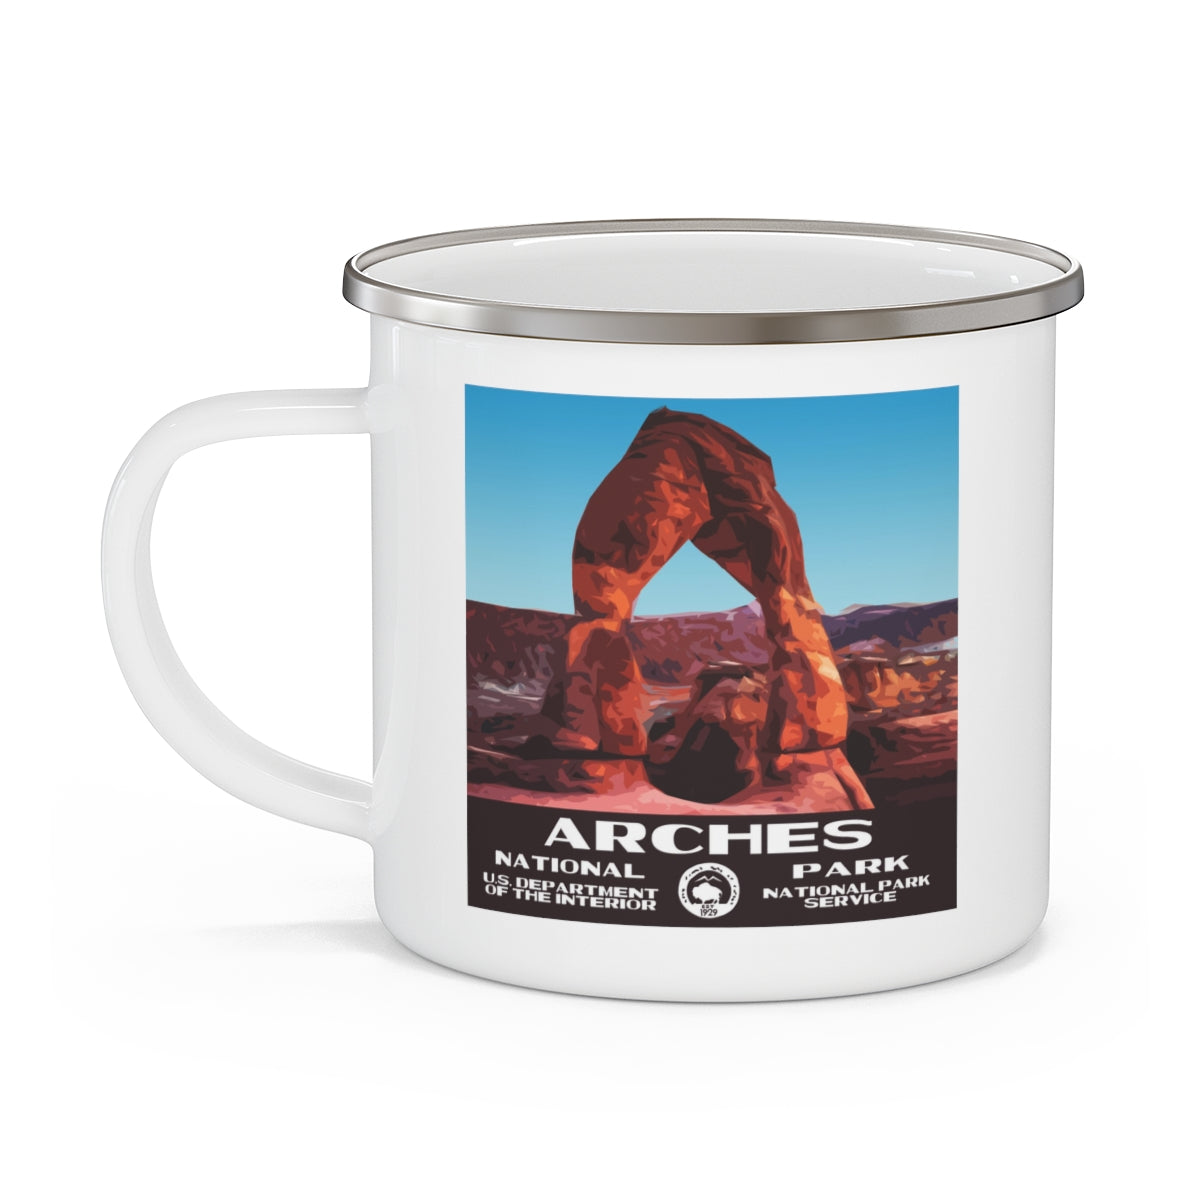 Arches National Park Enamel Camping Mug